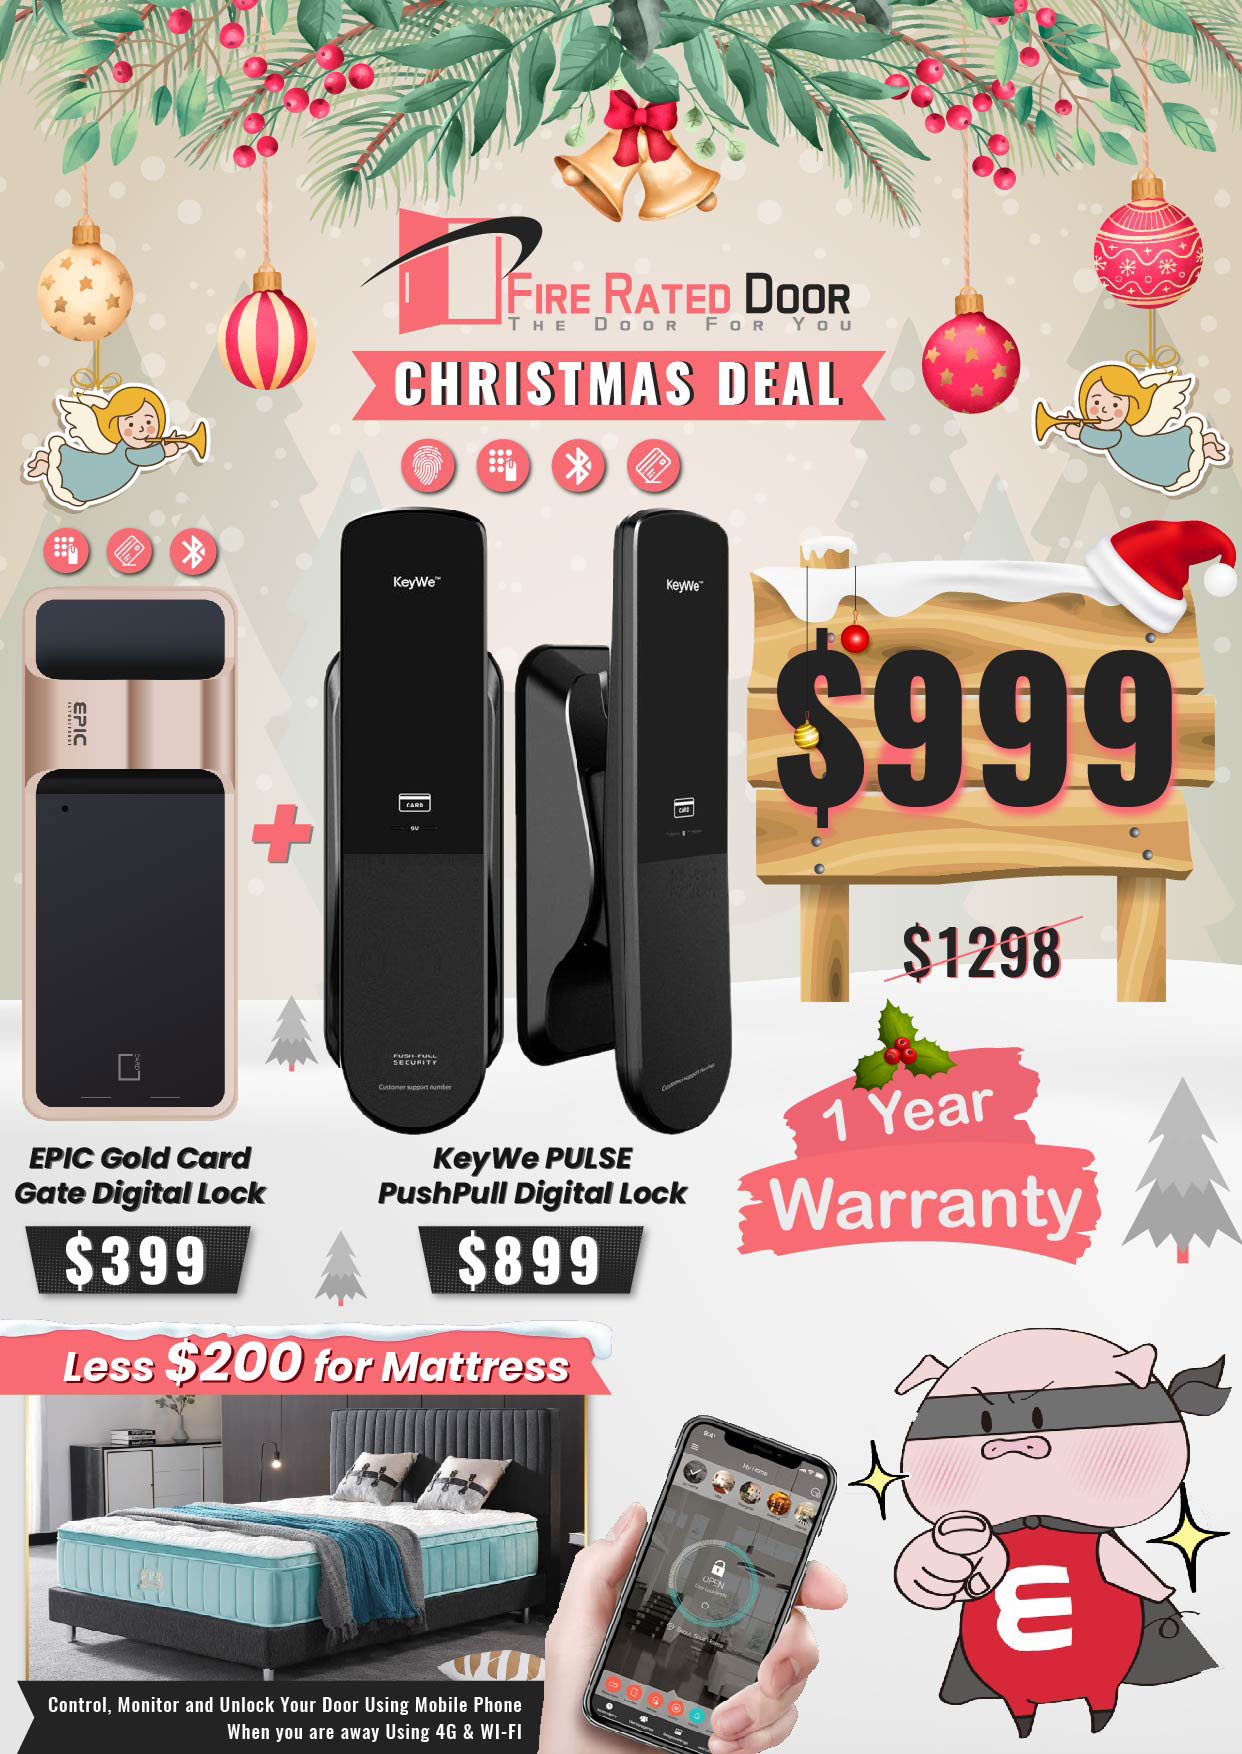 Flyer Design for Digital Lock Christmas Offer